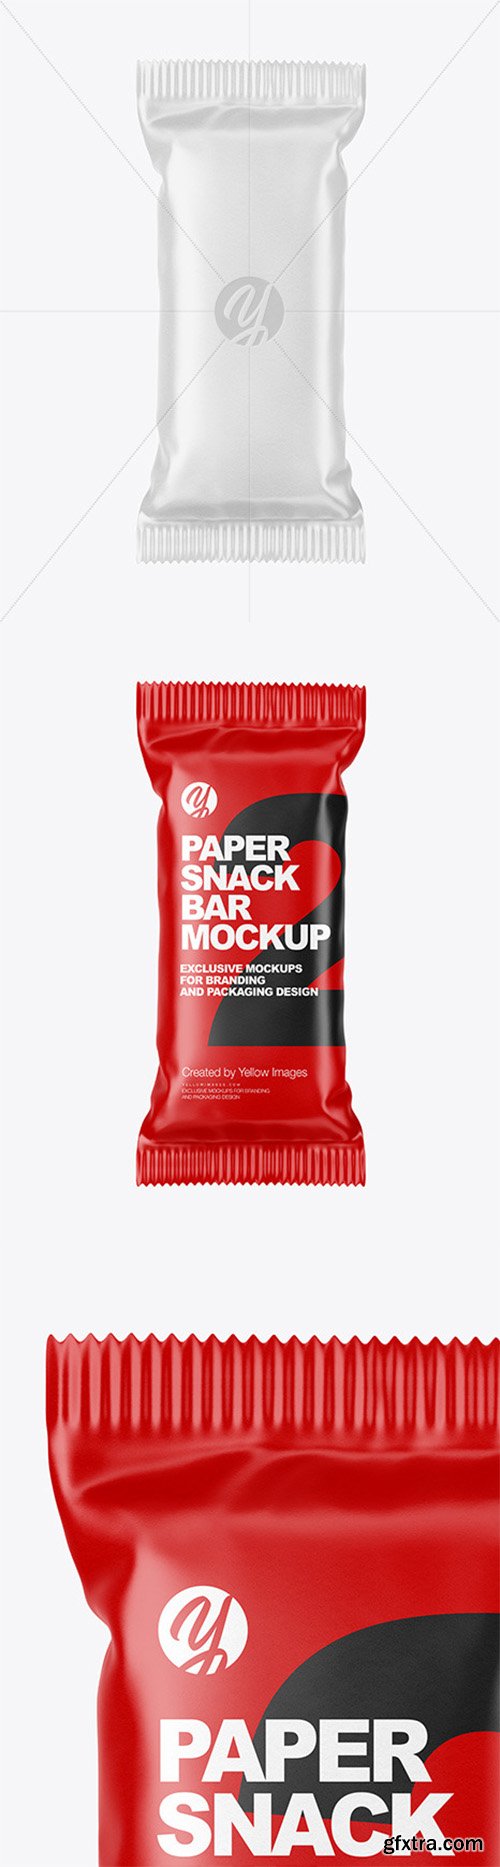 Paper Snack Bar Mockup 52553